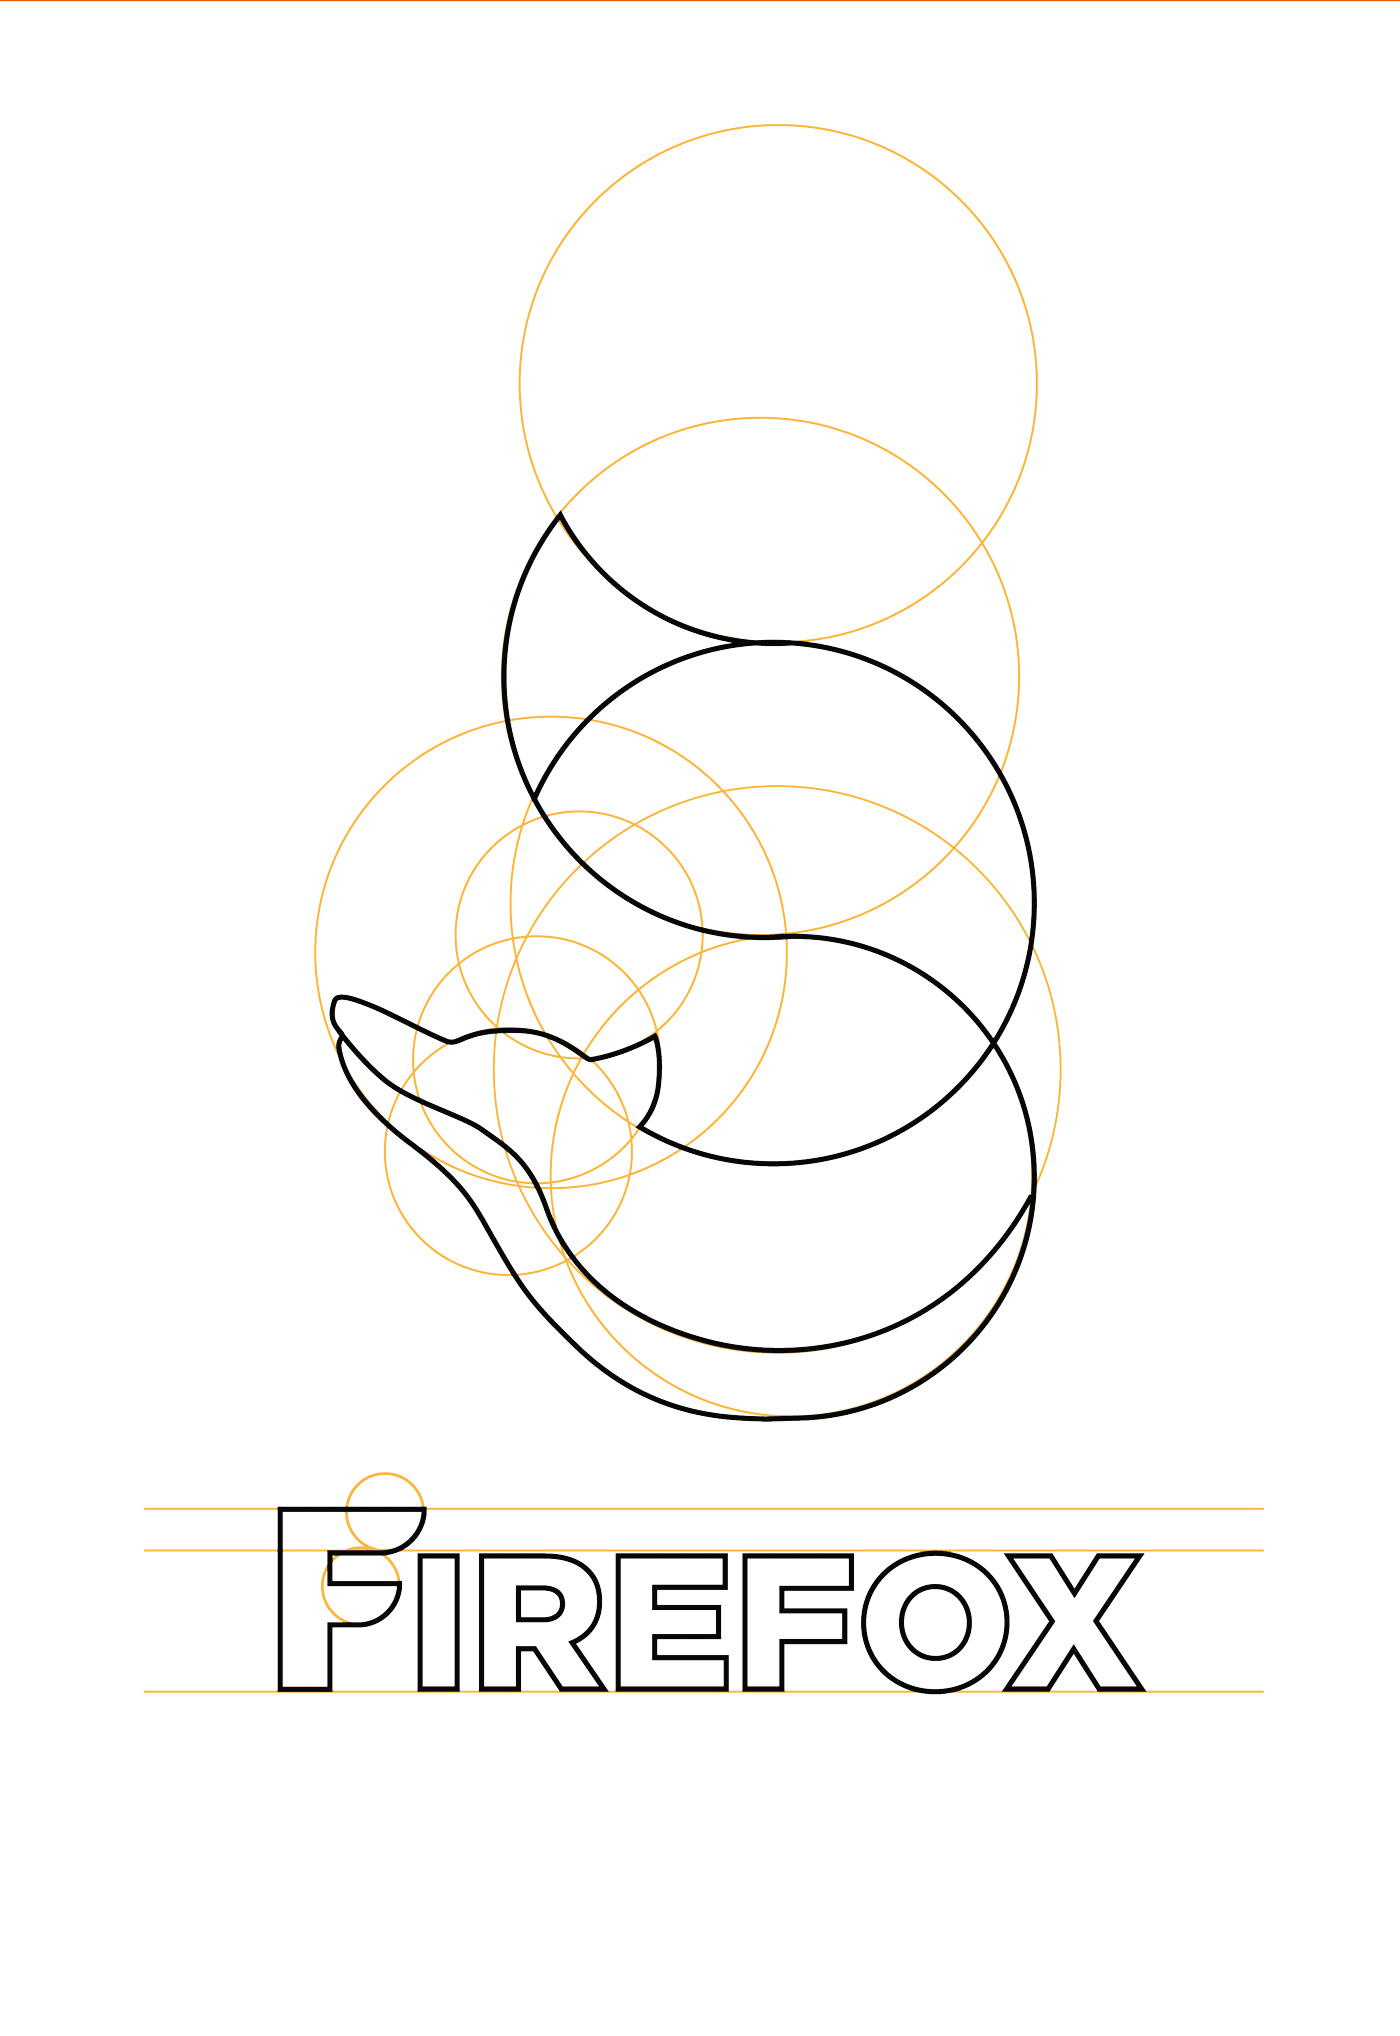 logo Rebrand fire FOX Web Internet www browser firefox